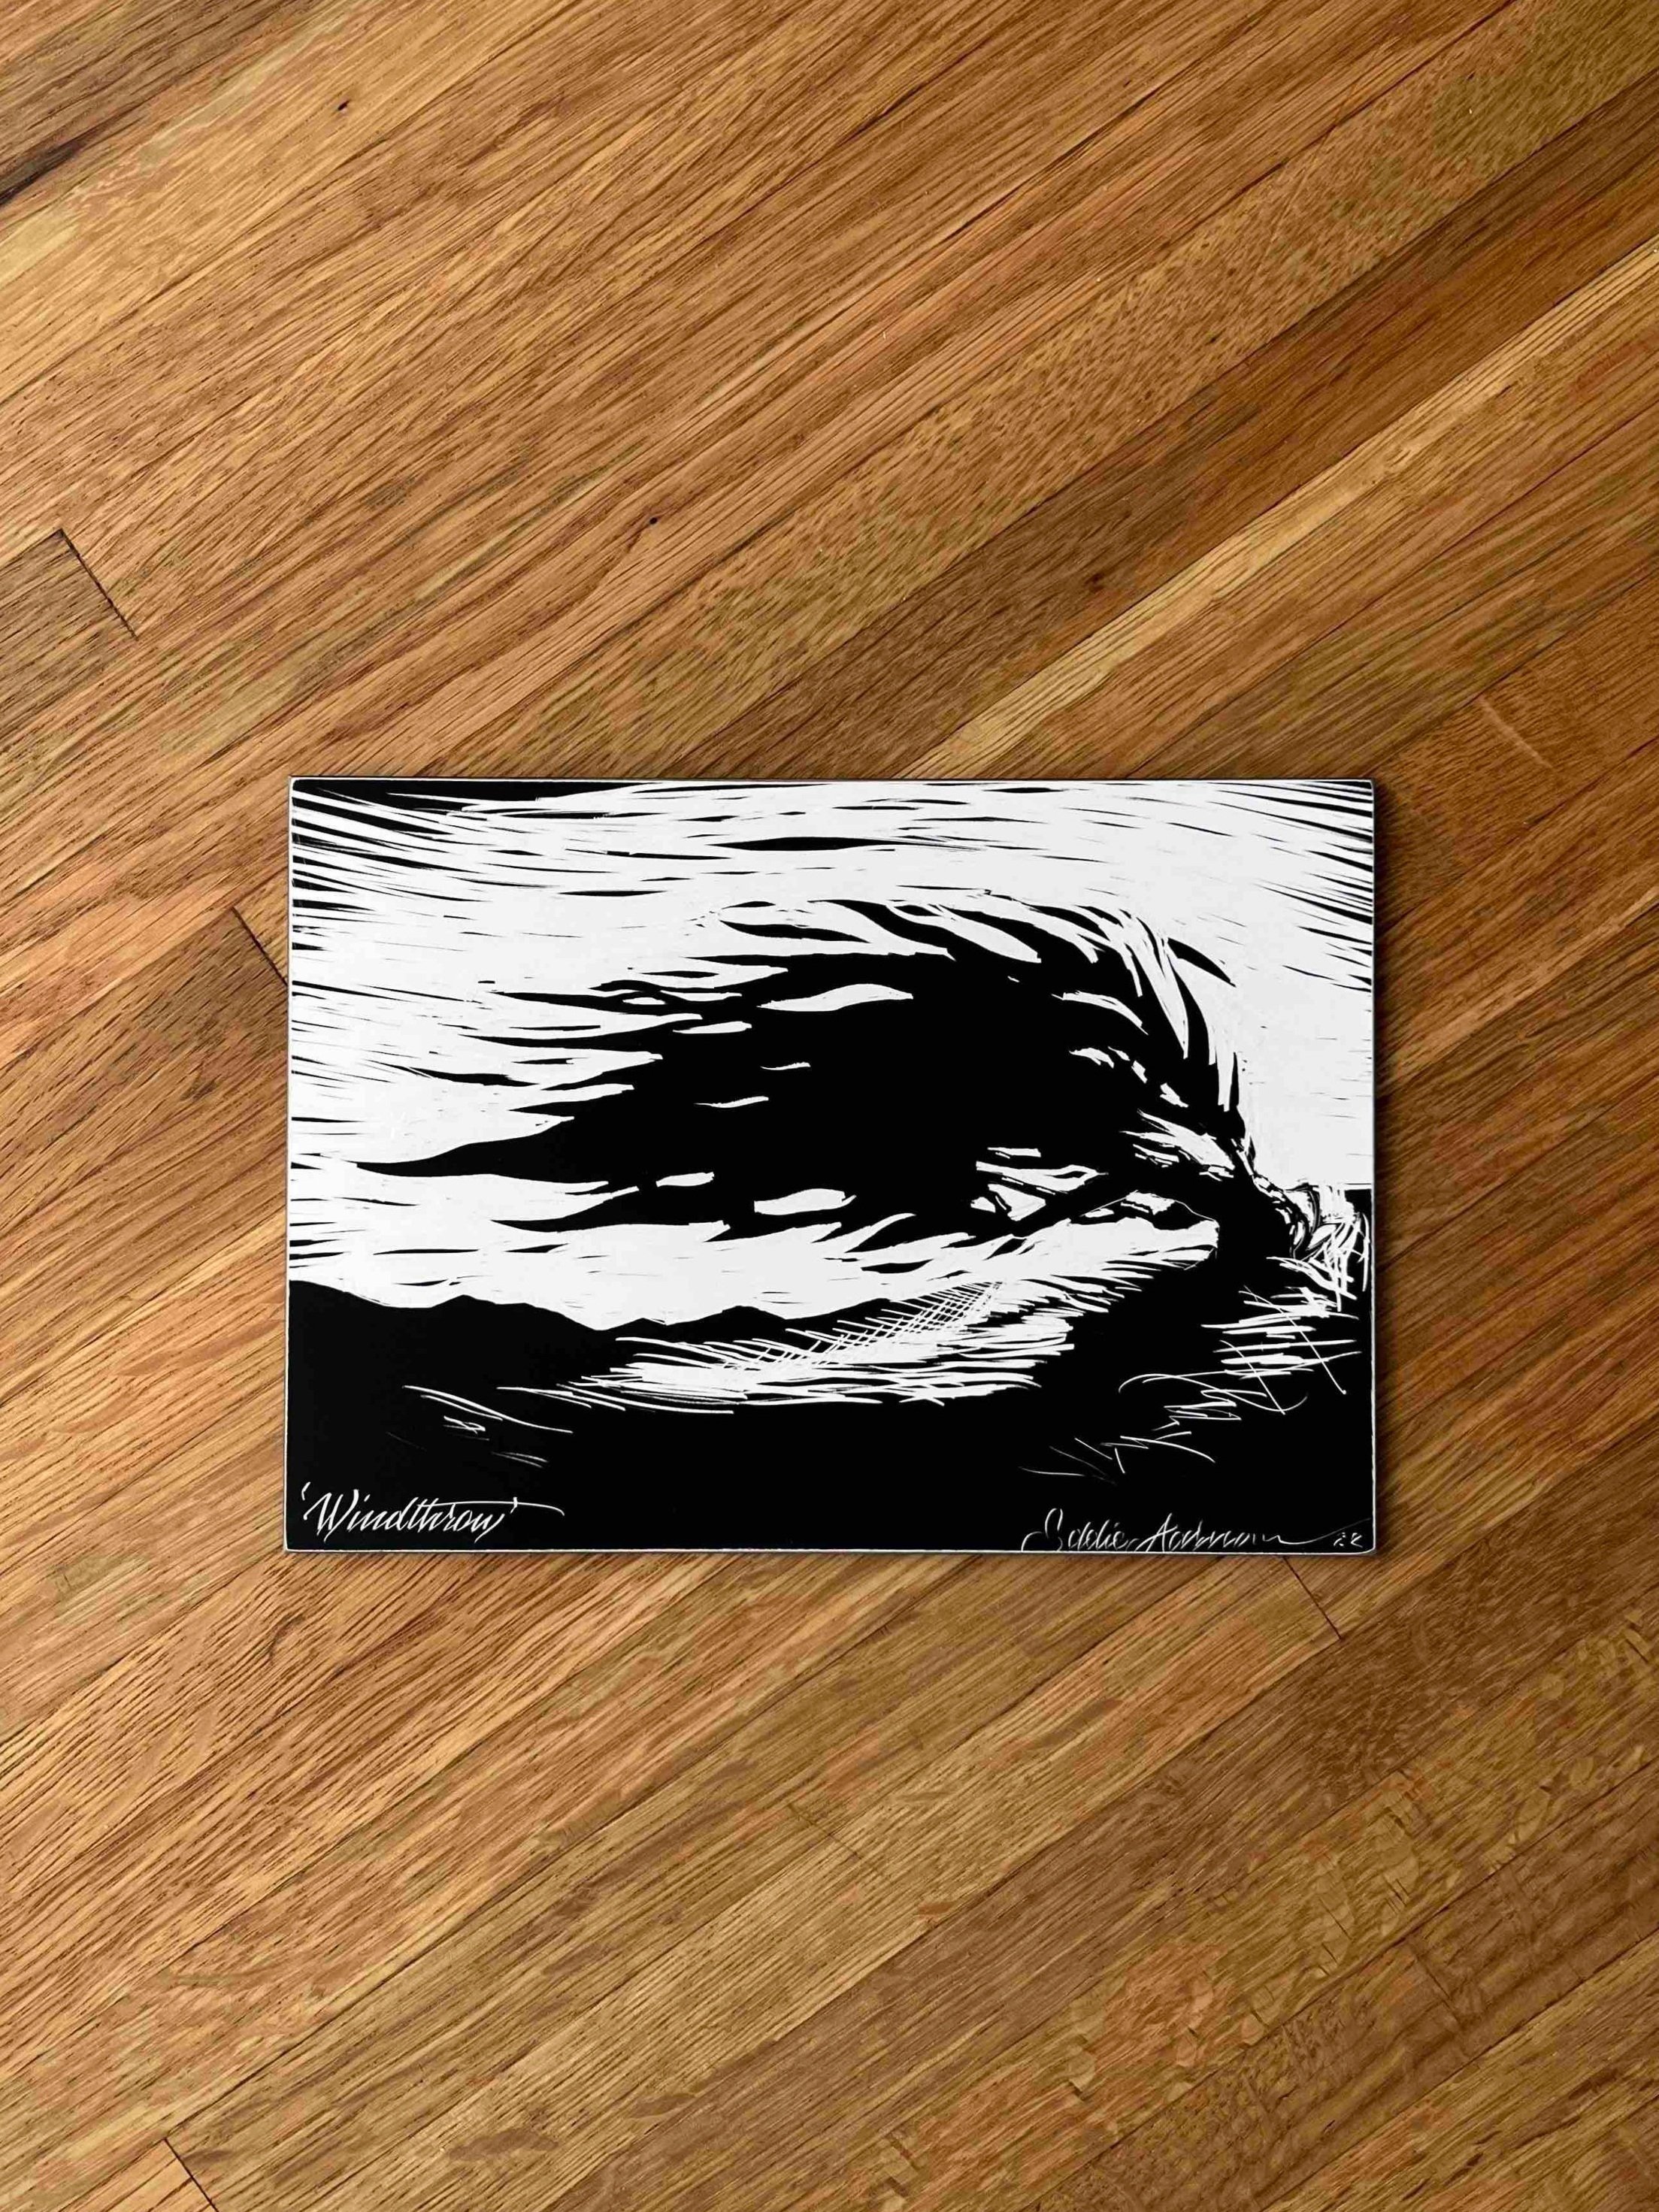 Windthrow+Tree+Abstract+Black+%26+White+Original+Artwork+Scratchboard+Etching.jpg